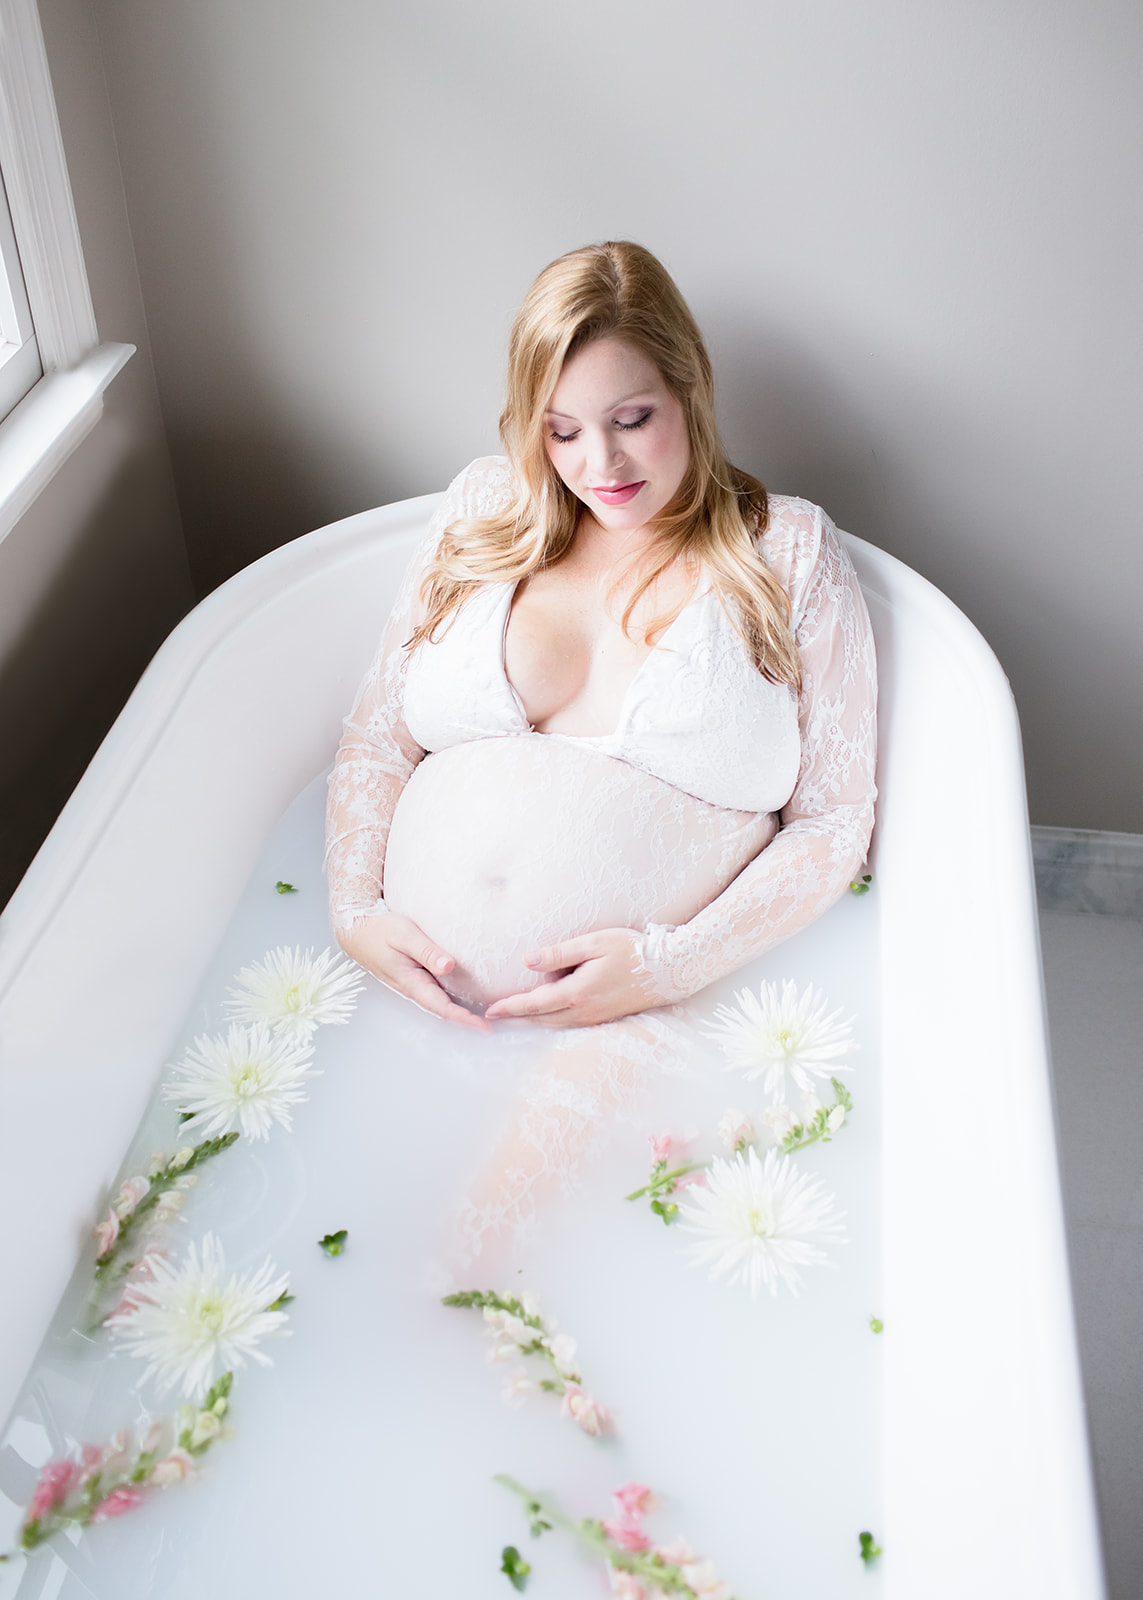 Milk bath maternity session